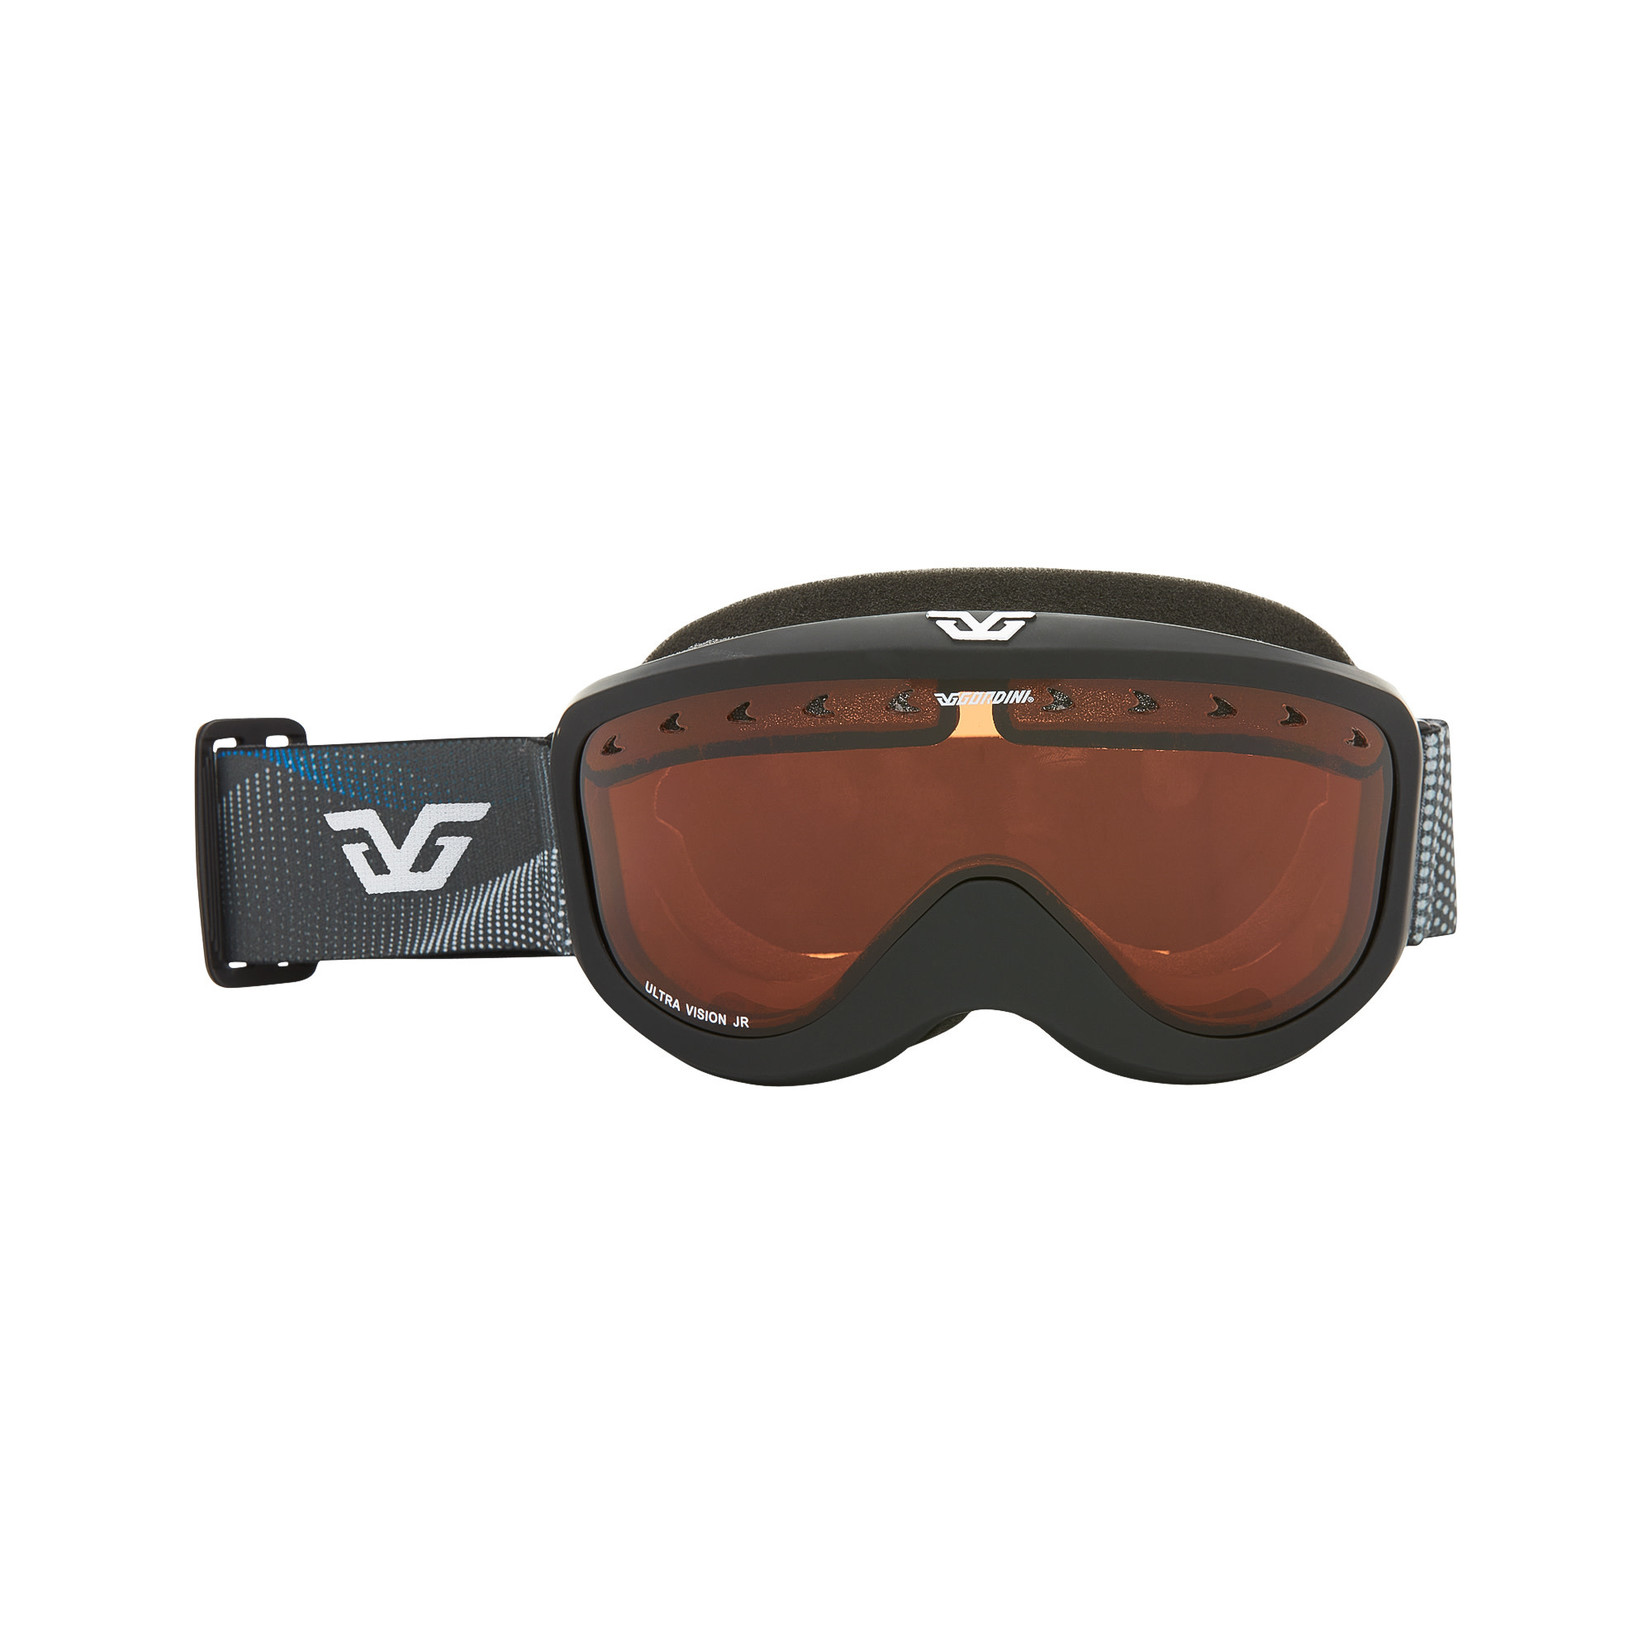 Gordini Gordini Ultra Vision OTG - Lunettes de Ski Junior